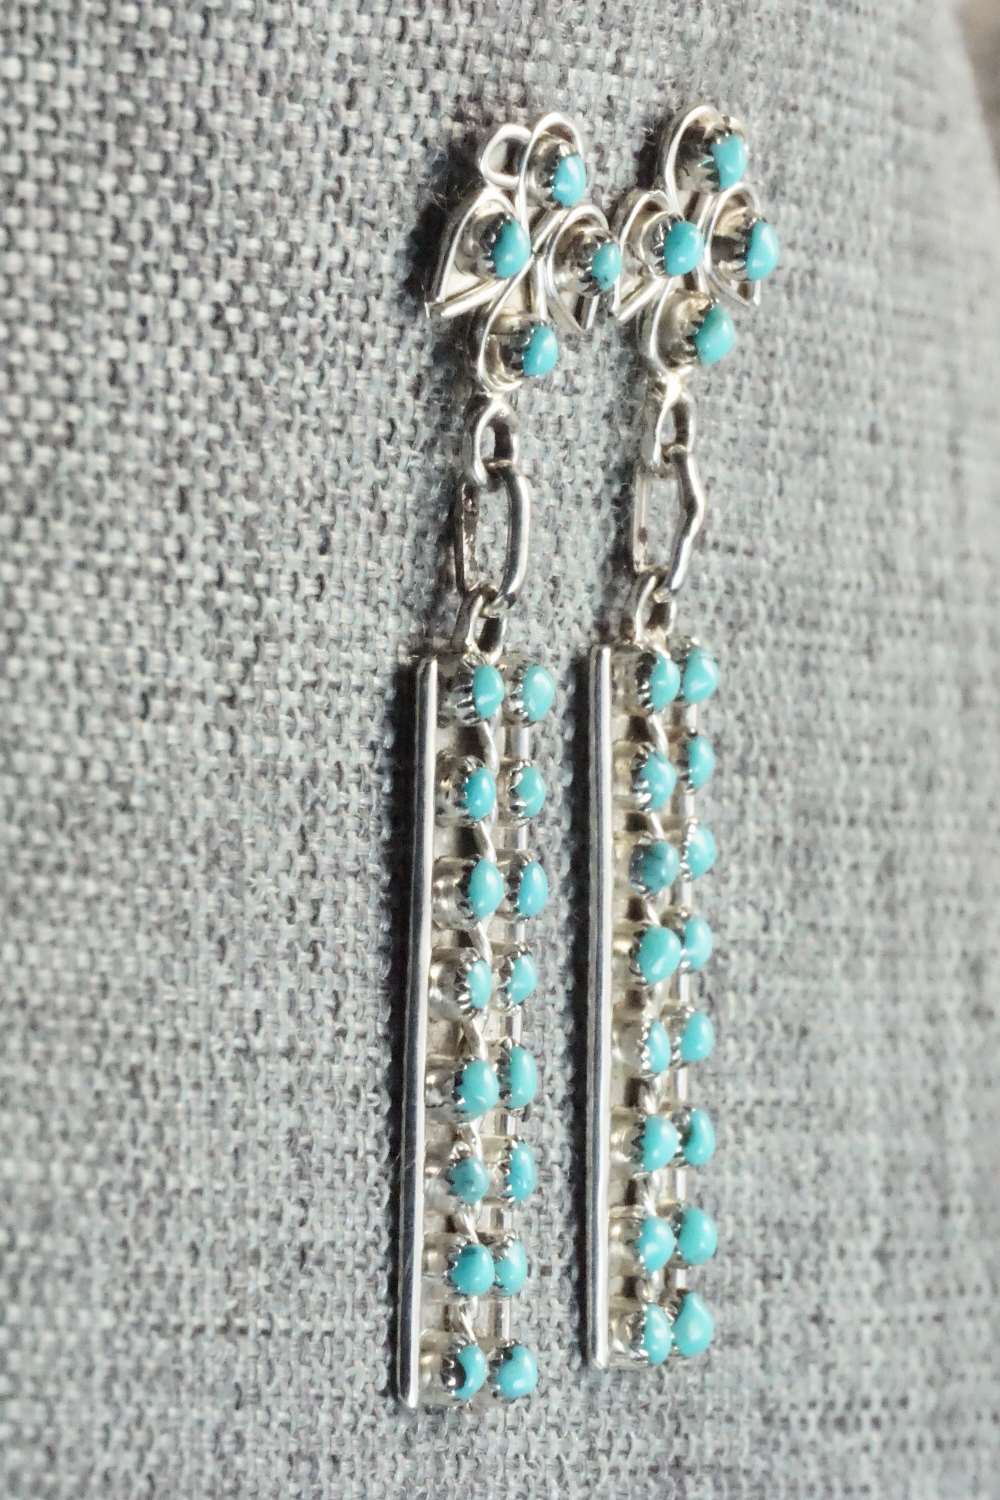 Turquoise & Sterling Silver Earrings - Herbert Lastiyano